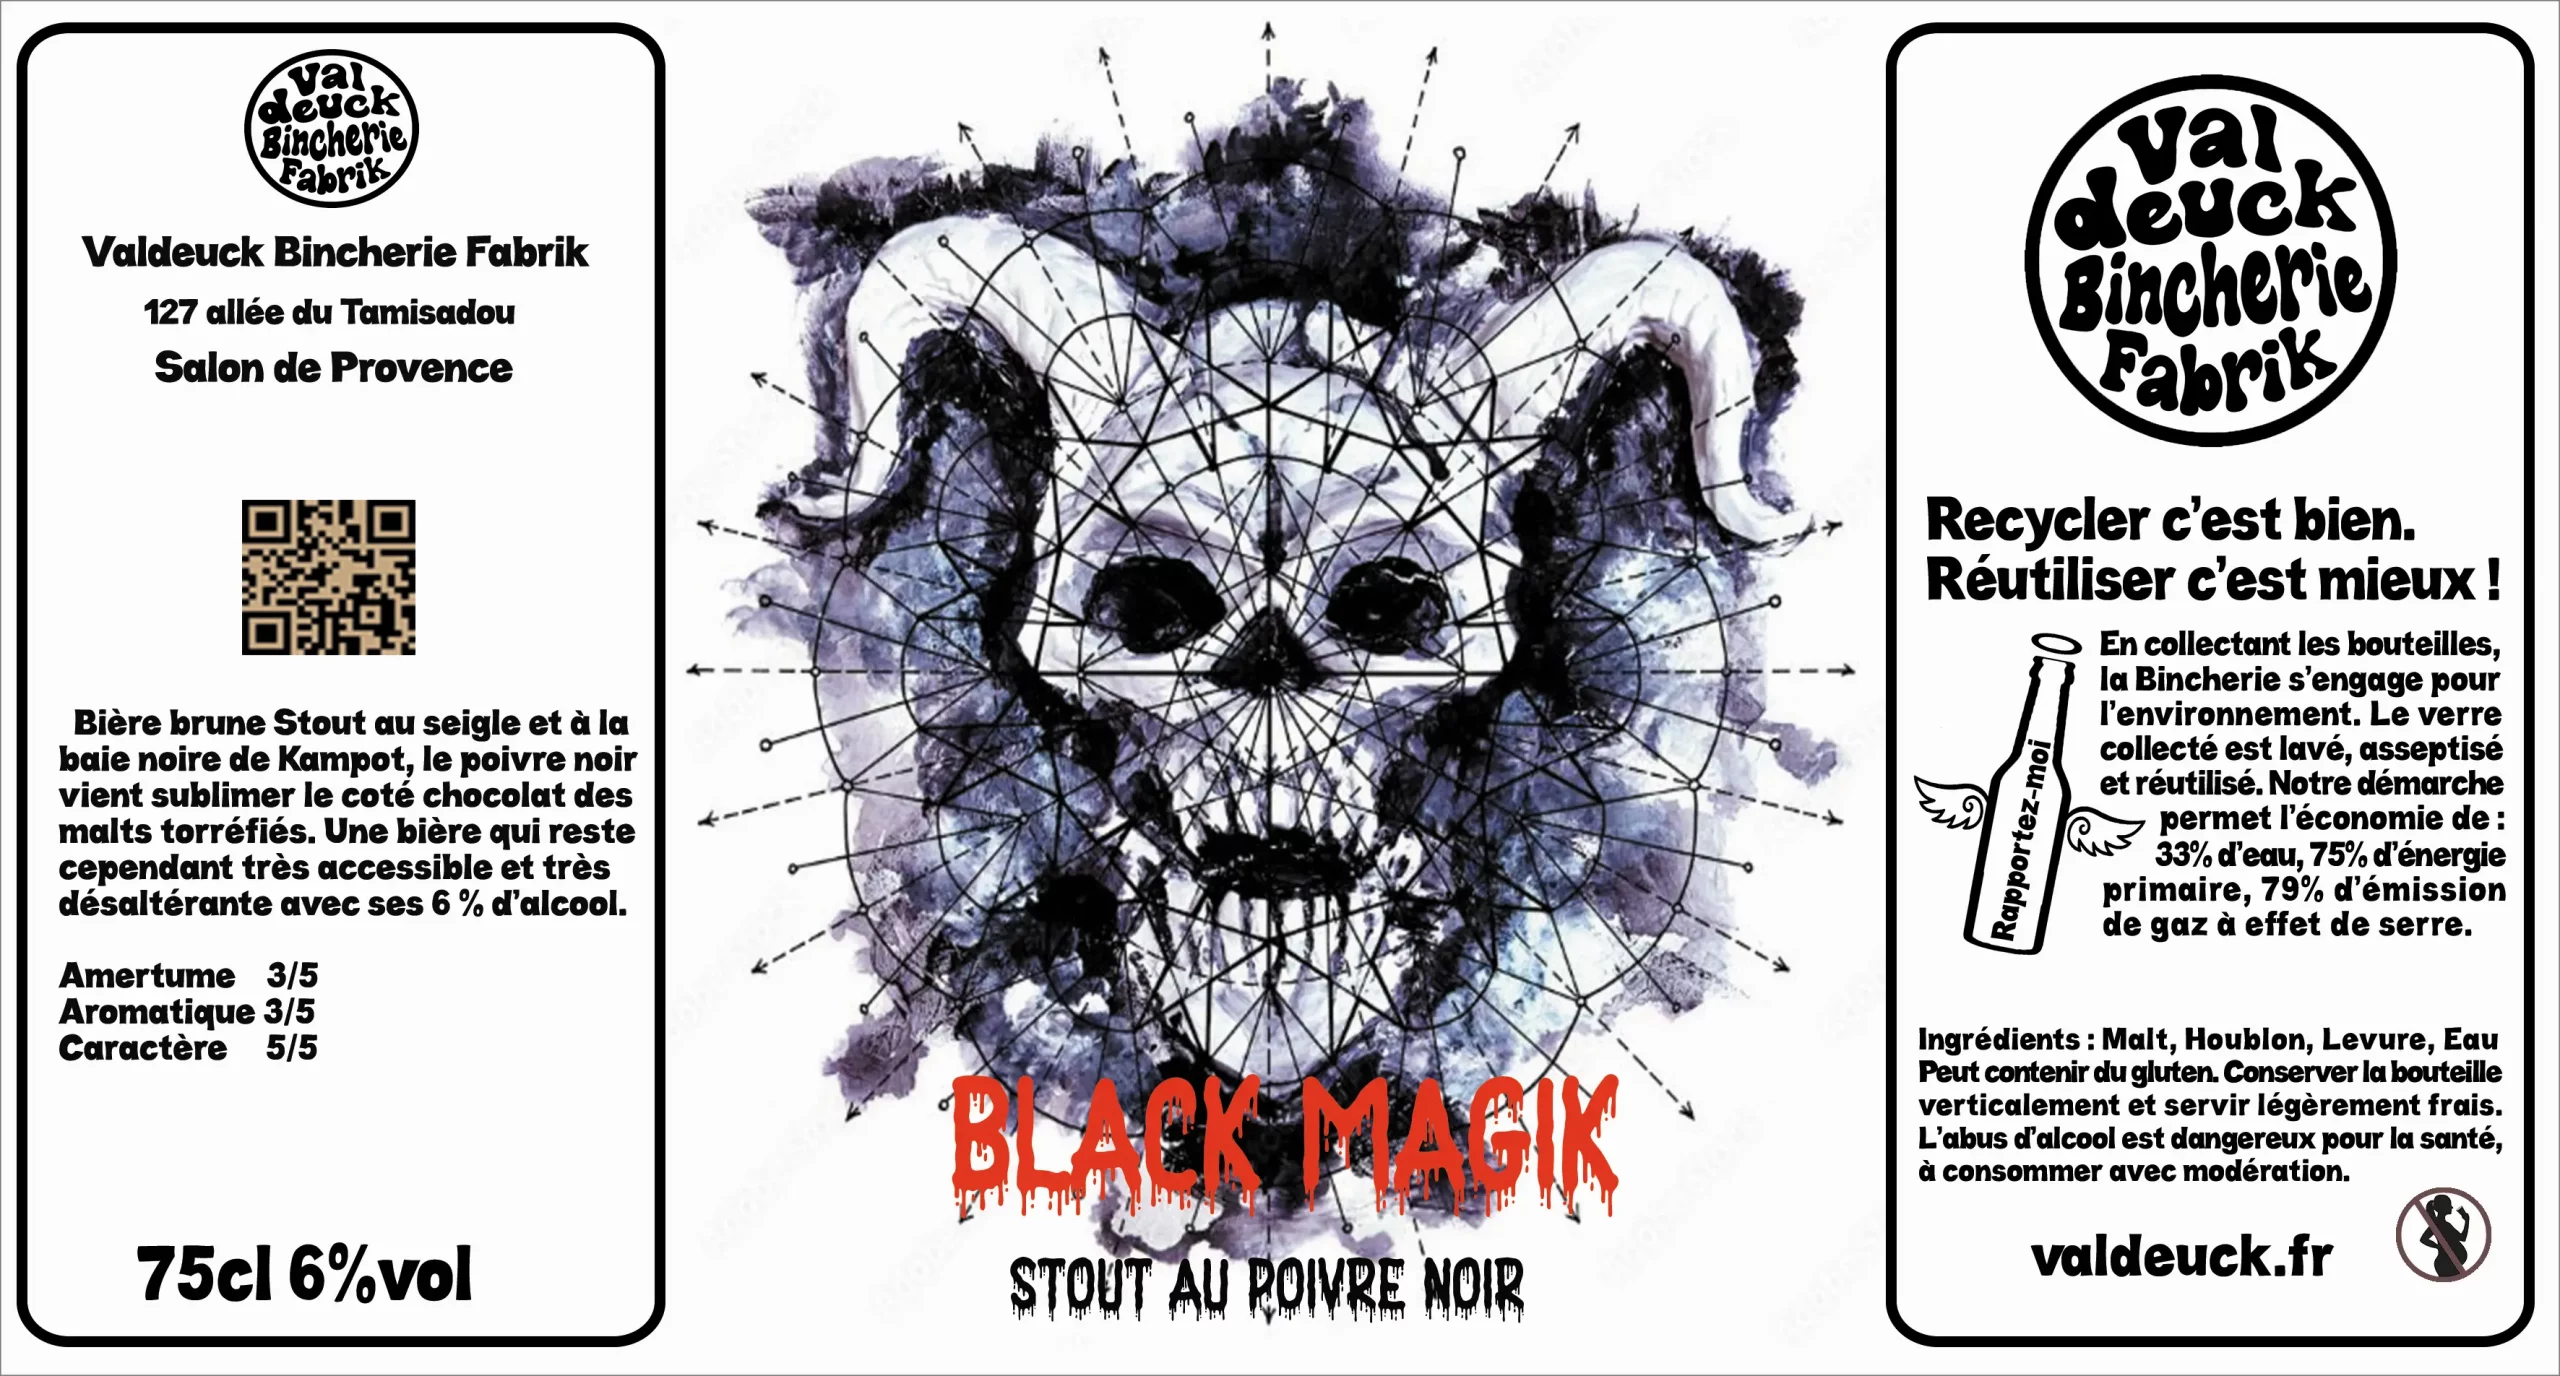 La Black Magik (75cl) valdeuck bincherie fabrik salon de provence